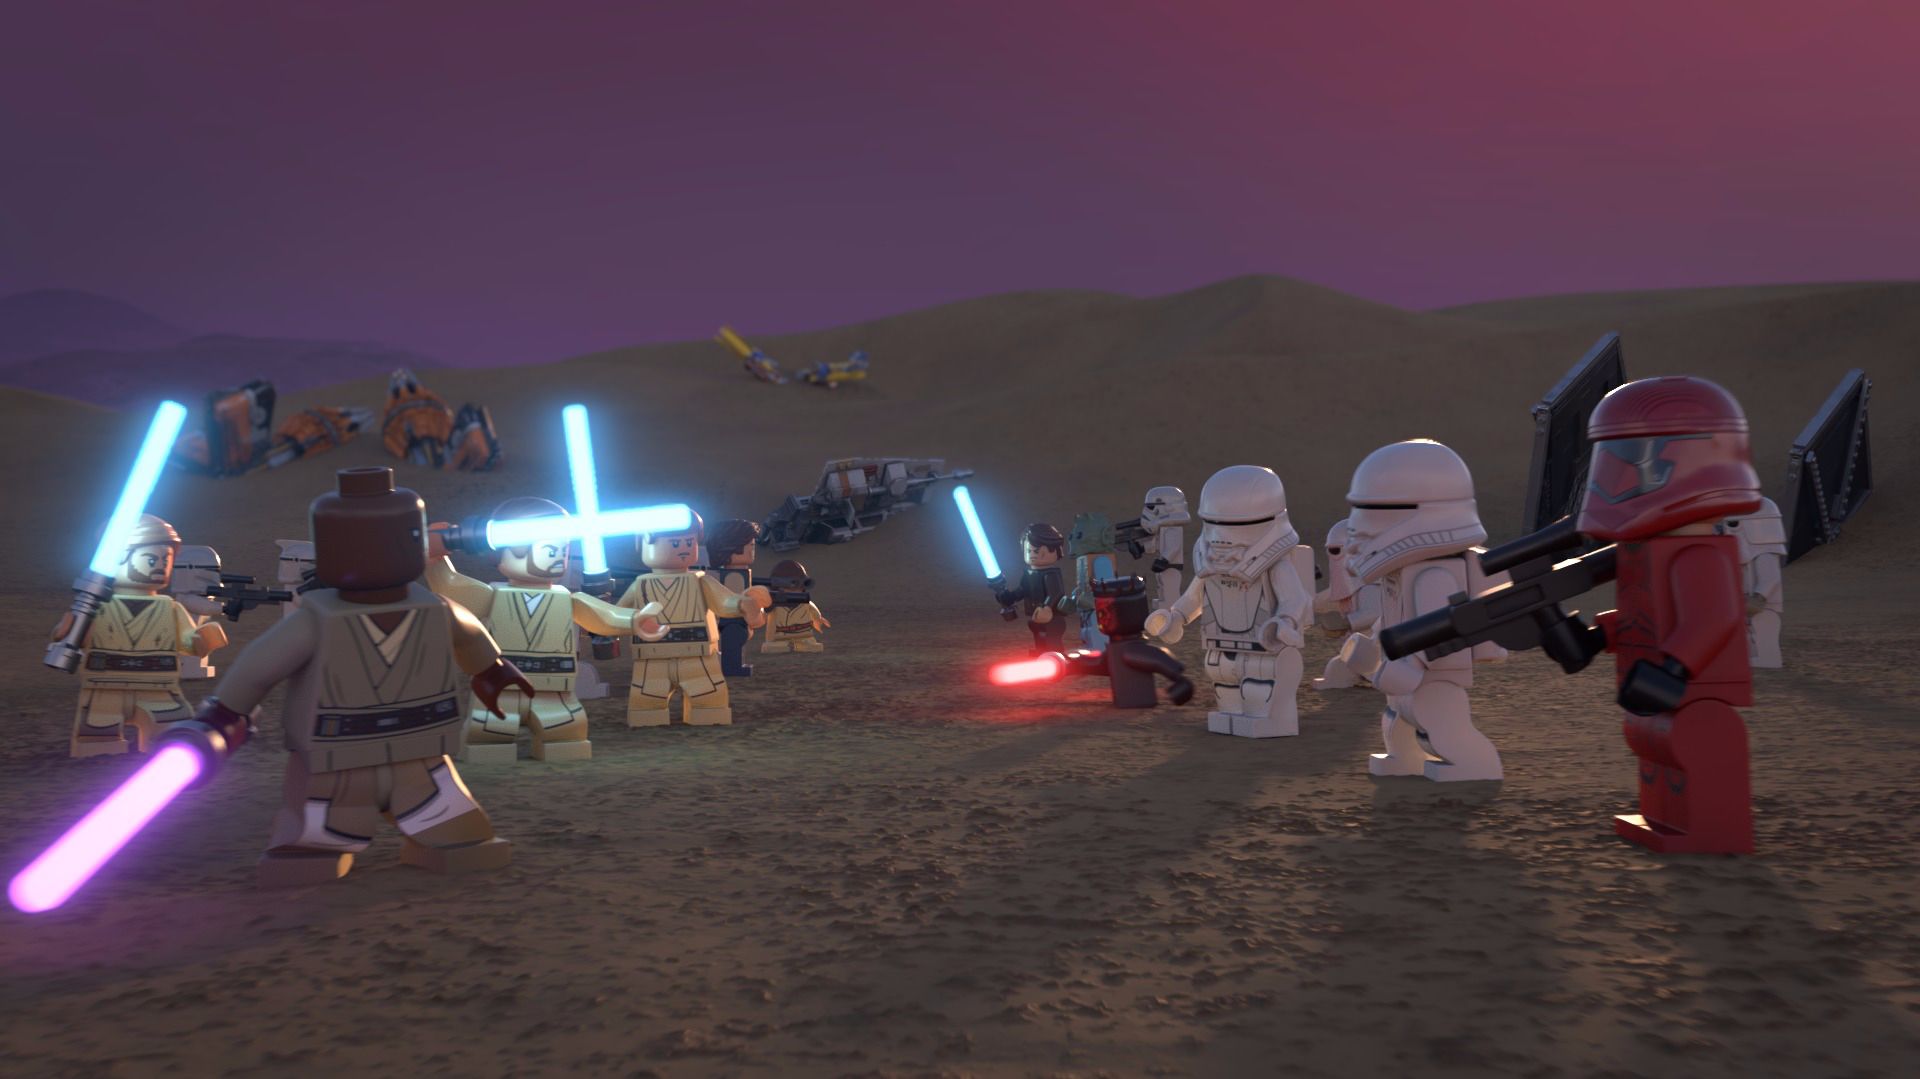 Lego Star Wars Holiday Special Disney Plus Image 1